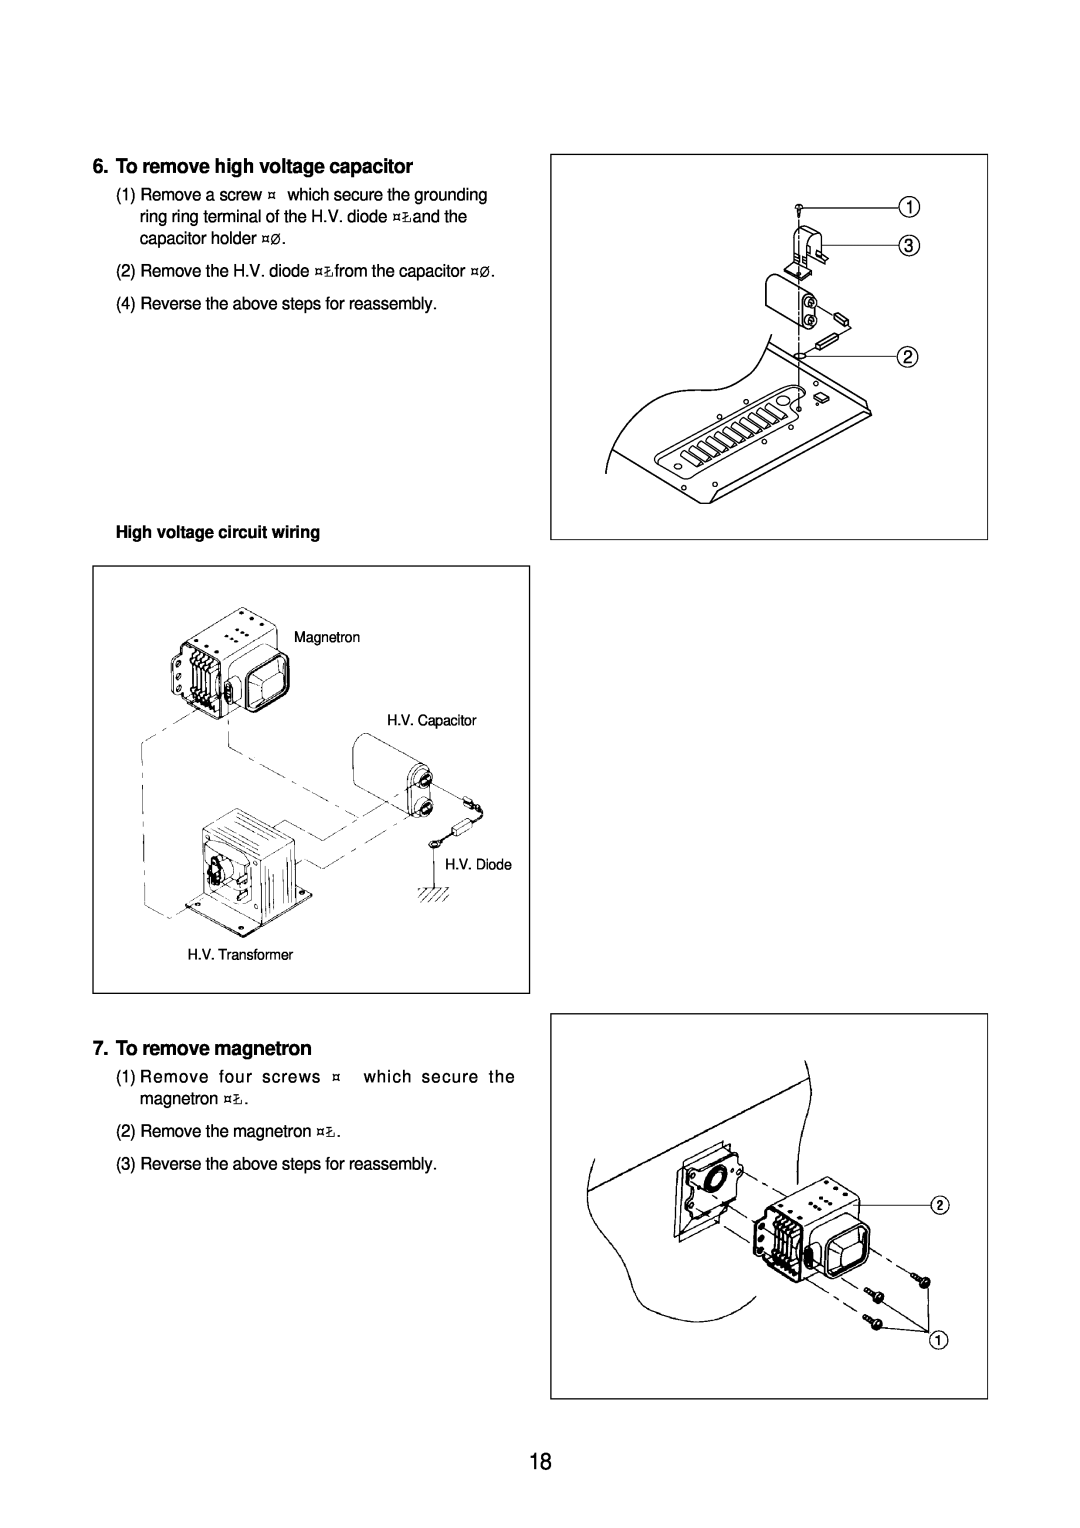 Daewoo KOR-61151, KOR-61155 To remove high voltage capacitor, To remove magnetron, High voltage circuit wiring 